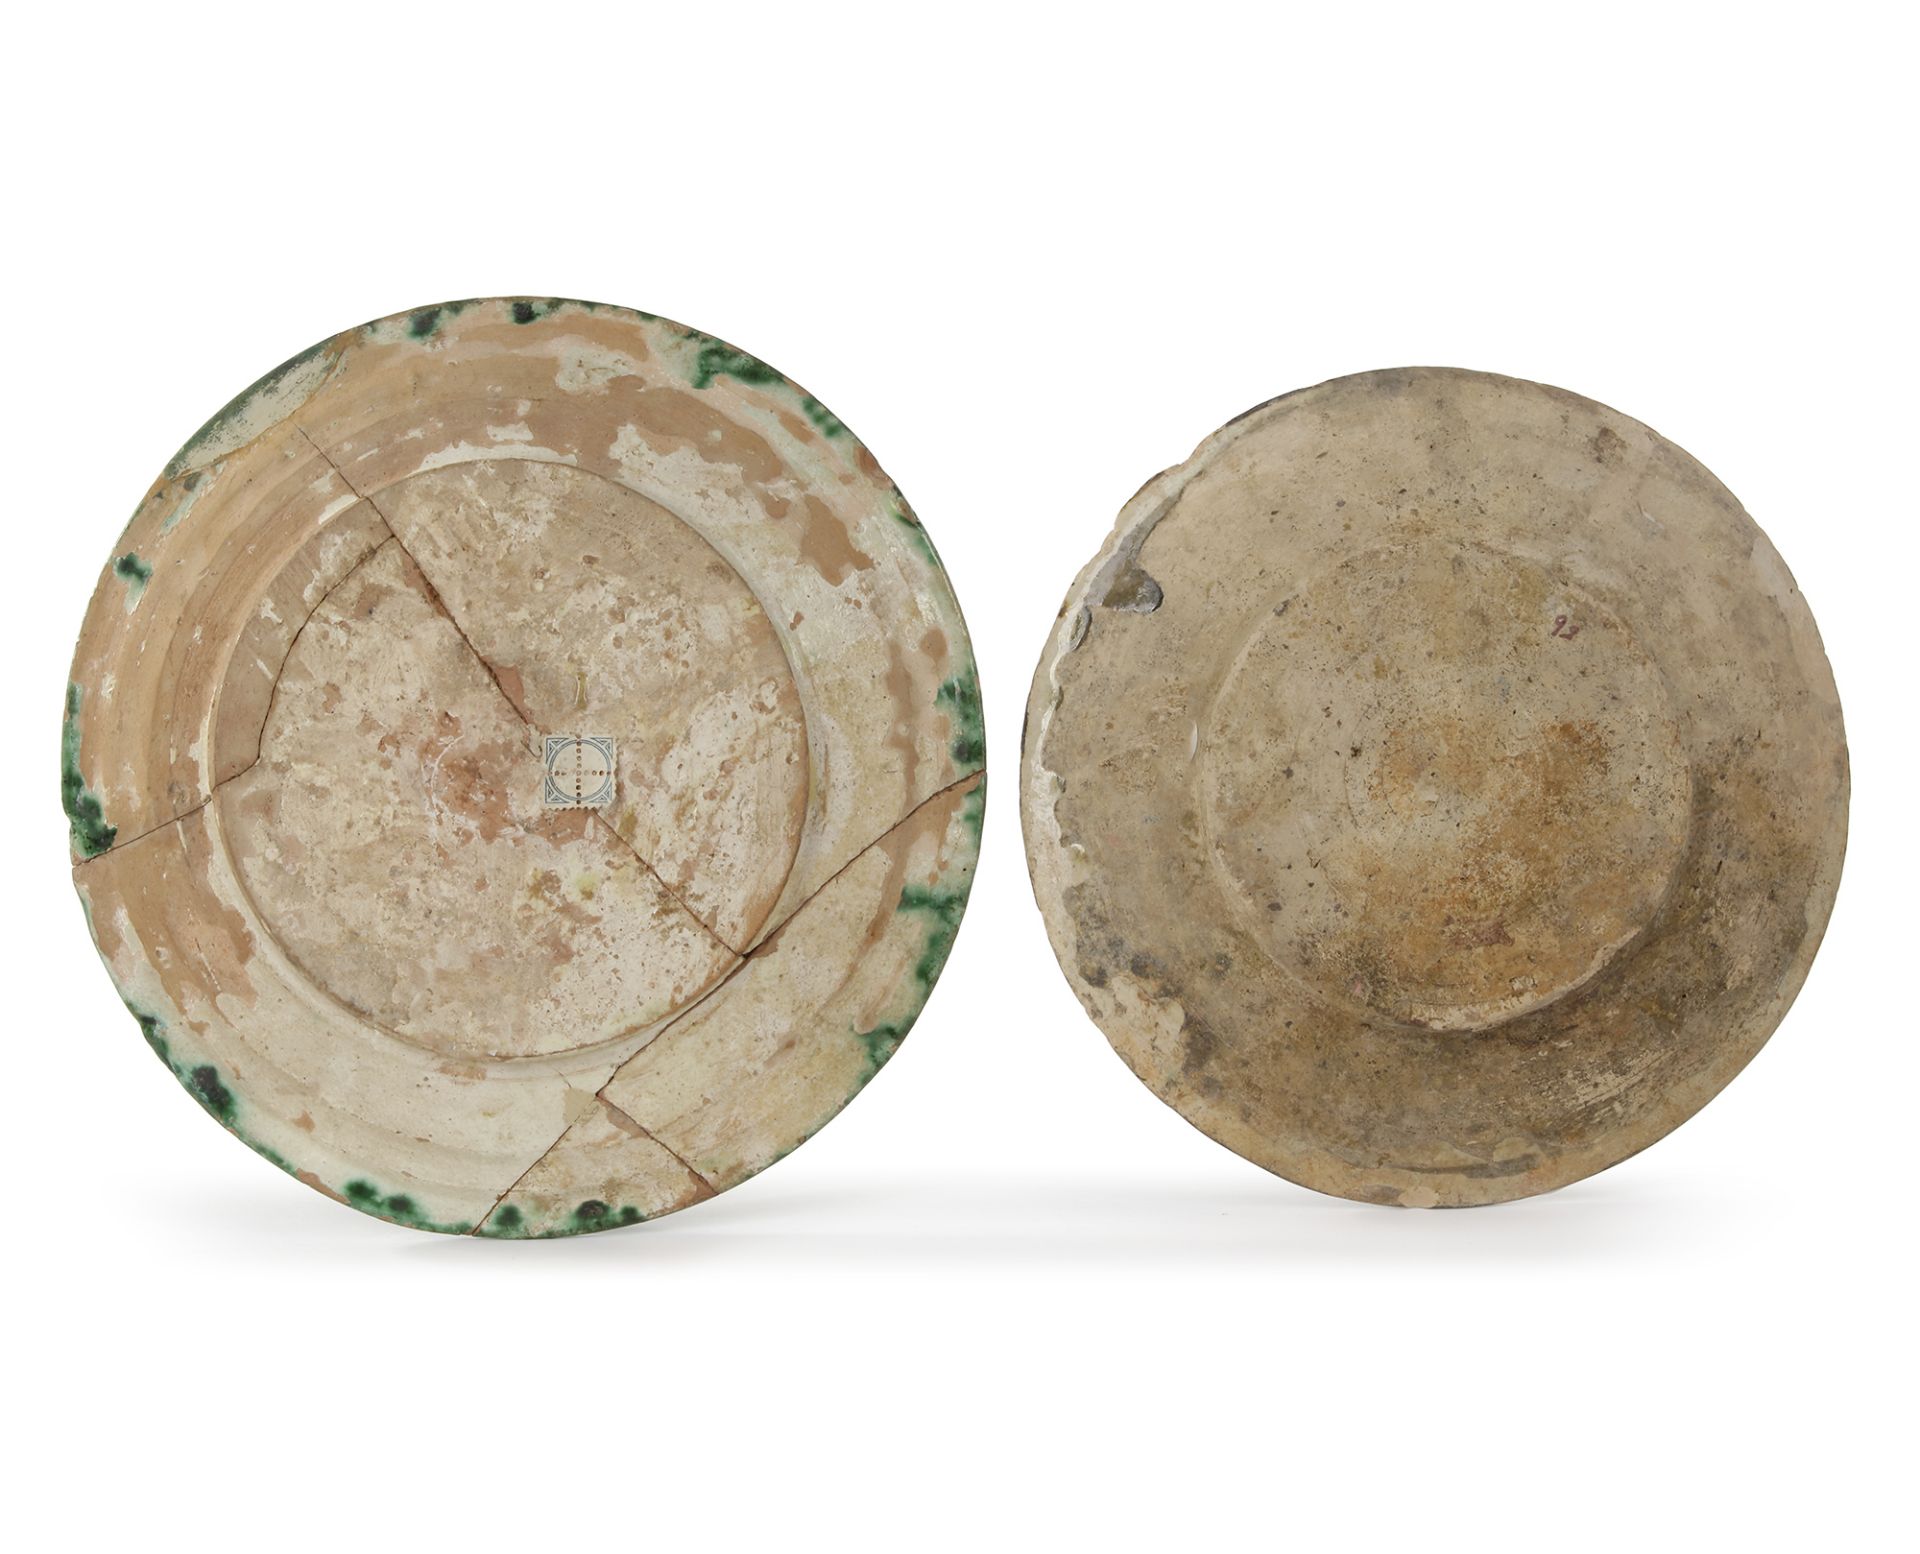 TWO NISHAPUR SPLASHWARE PLATES, PERSIA, 10TH CENTURY - Image 3 of 3